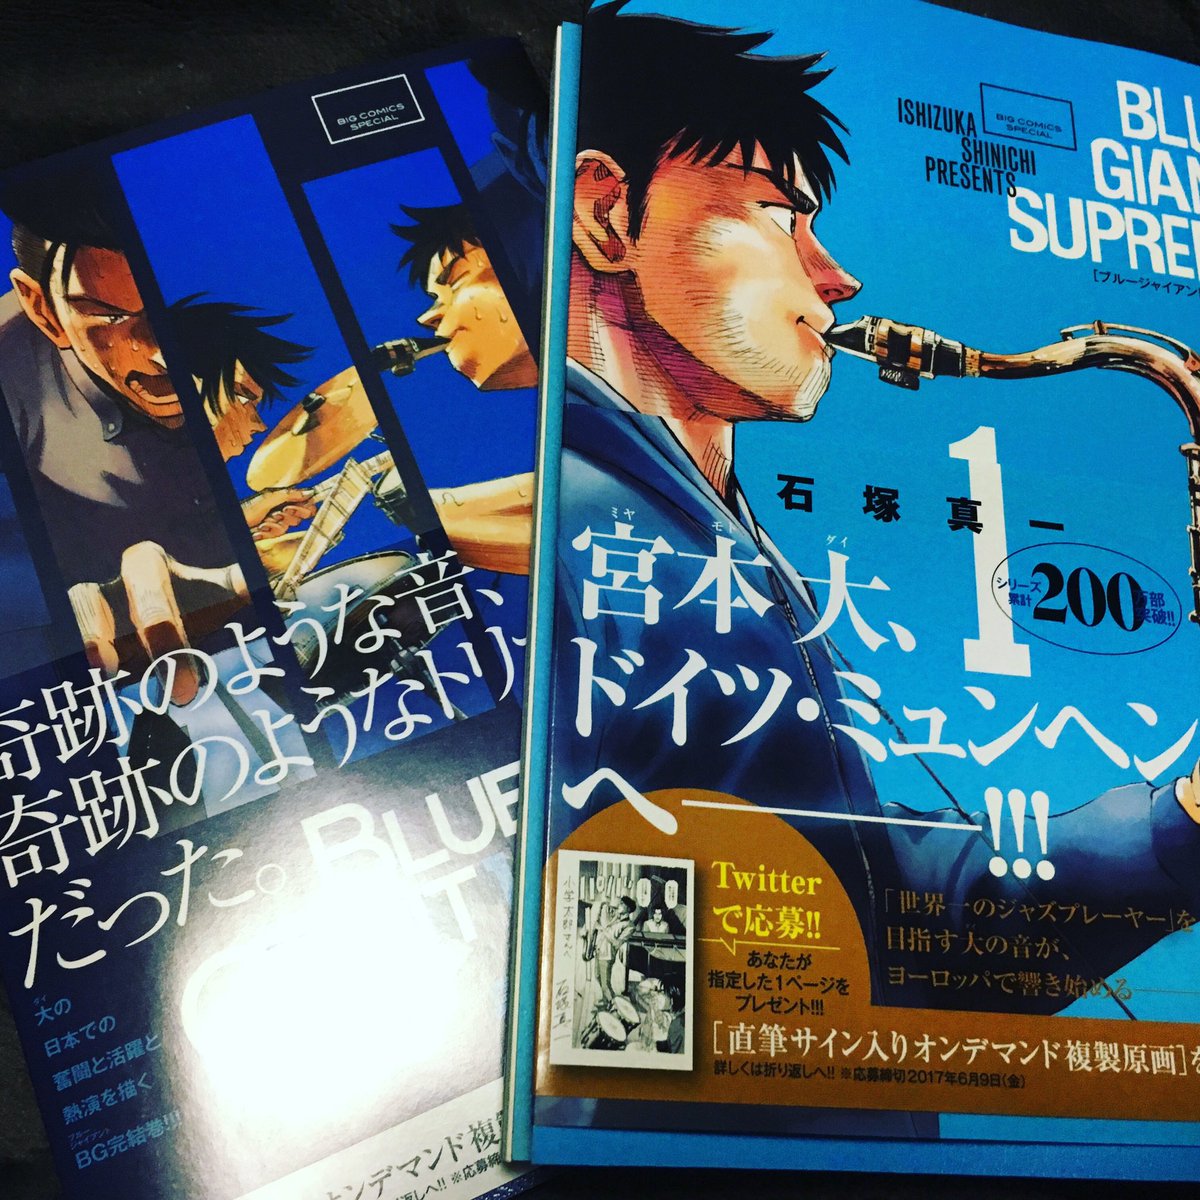 ট ইট র 黒 Blue Giant最終巻10巻とblue Giant Supreme1巻買いました とても良い漫画です 是非 Bluegiant Bluegiantsupreme ブルージャイアント ブルージャイアントシュプリーム 最高 熱い 心が震える 迫力 T Co 2aprmcbdv5